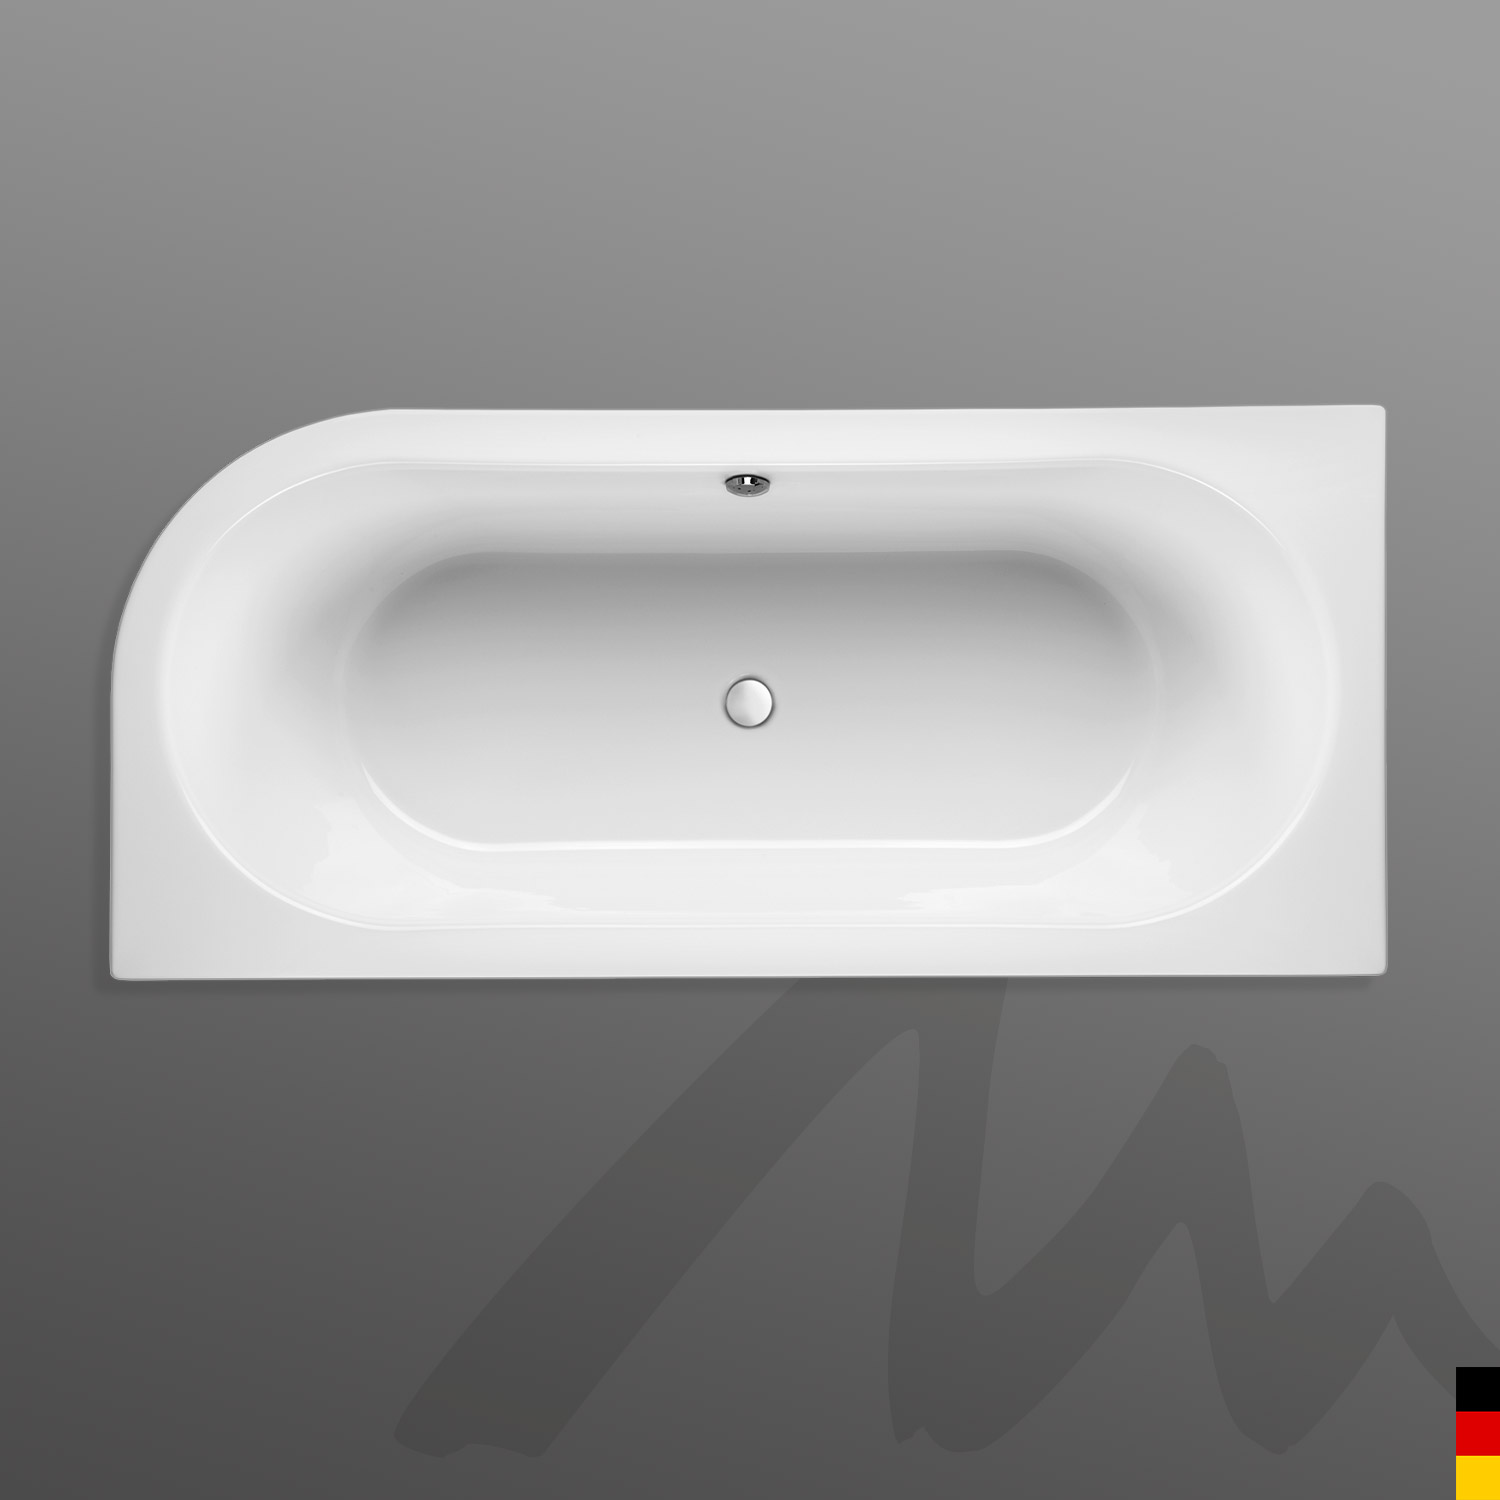 Mauersberger Badewanne Oval Primo 1 - 180/80 uno Ausführung rechts  180x80x45  Farbgruppe 2